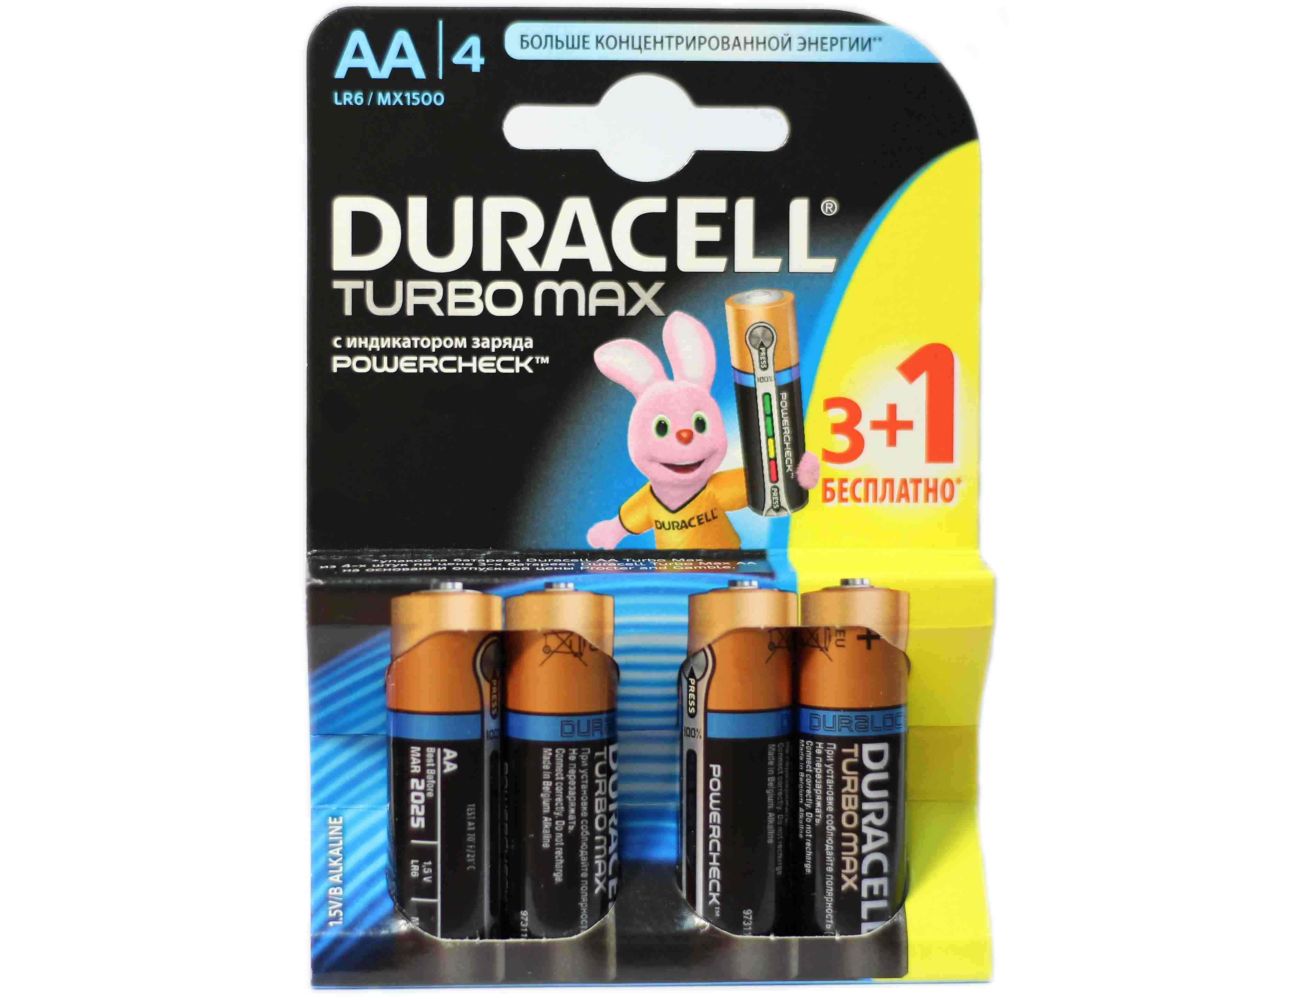 Батарейка Duracell AA Turbo LR06, 1.5V, Alkaline Щелочная 3 шт+1 бесплатно 1/4шт 5000394007772